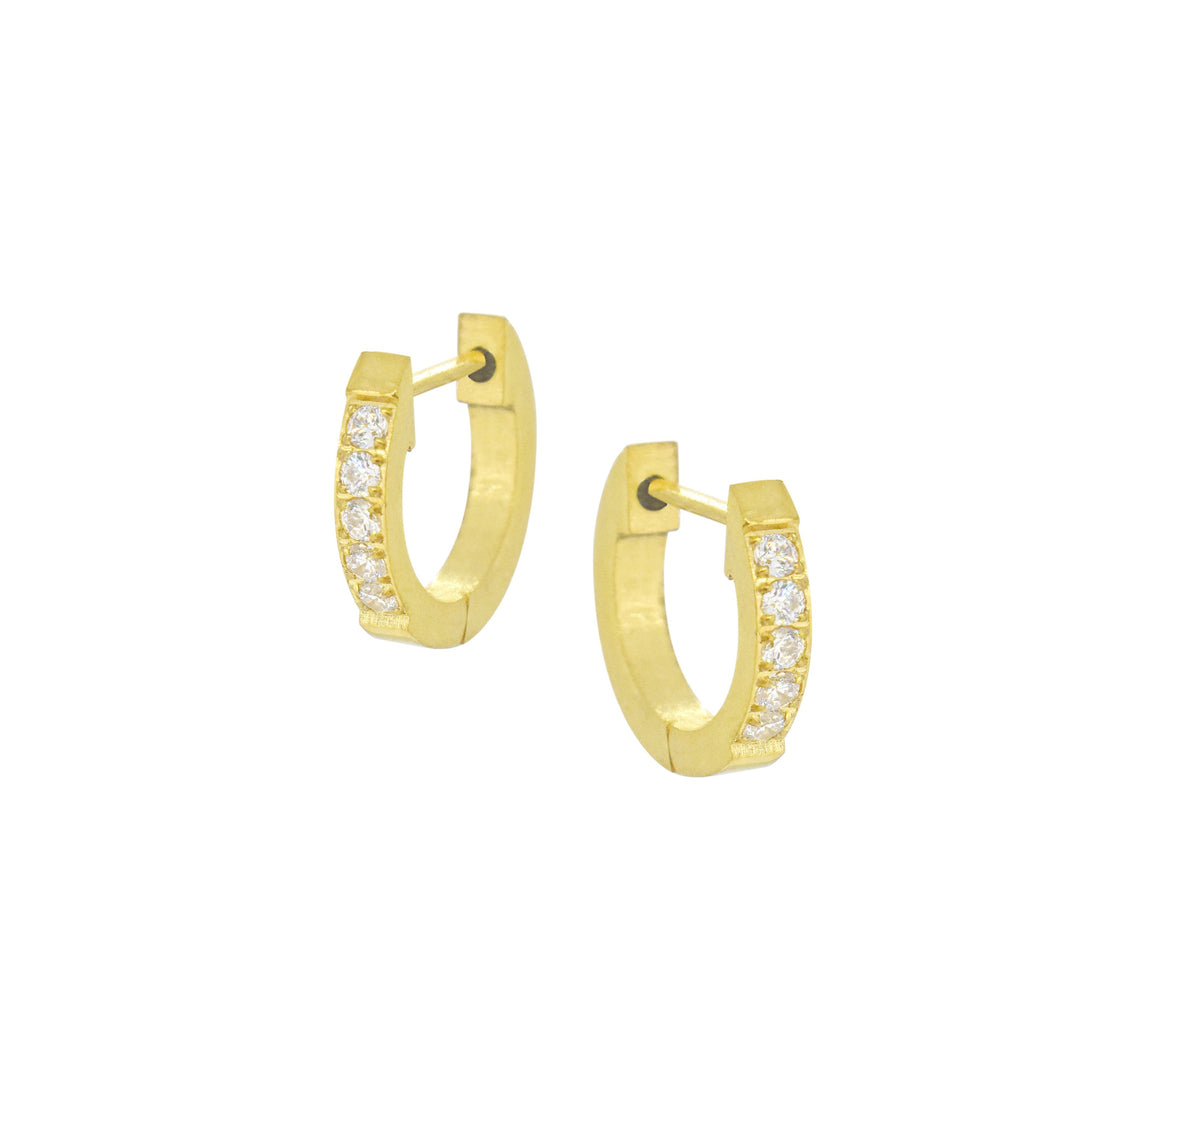 gold pave huggie earrings waterproof jewelry